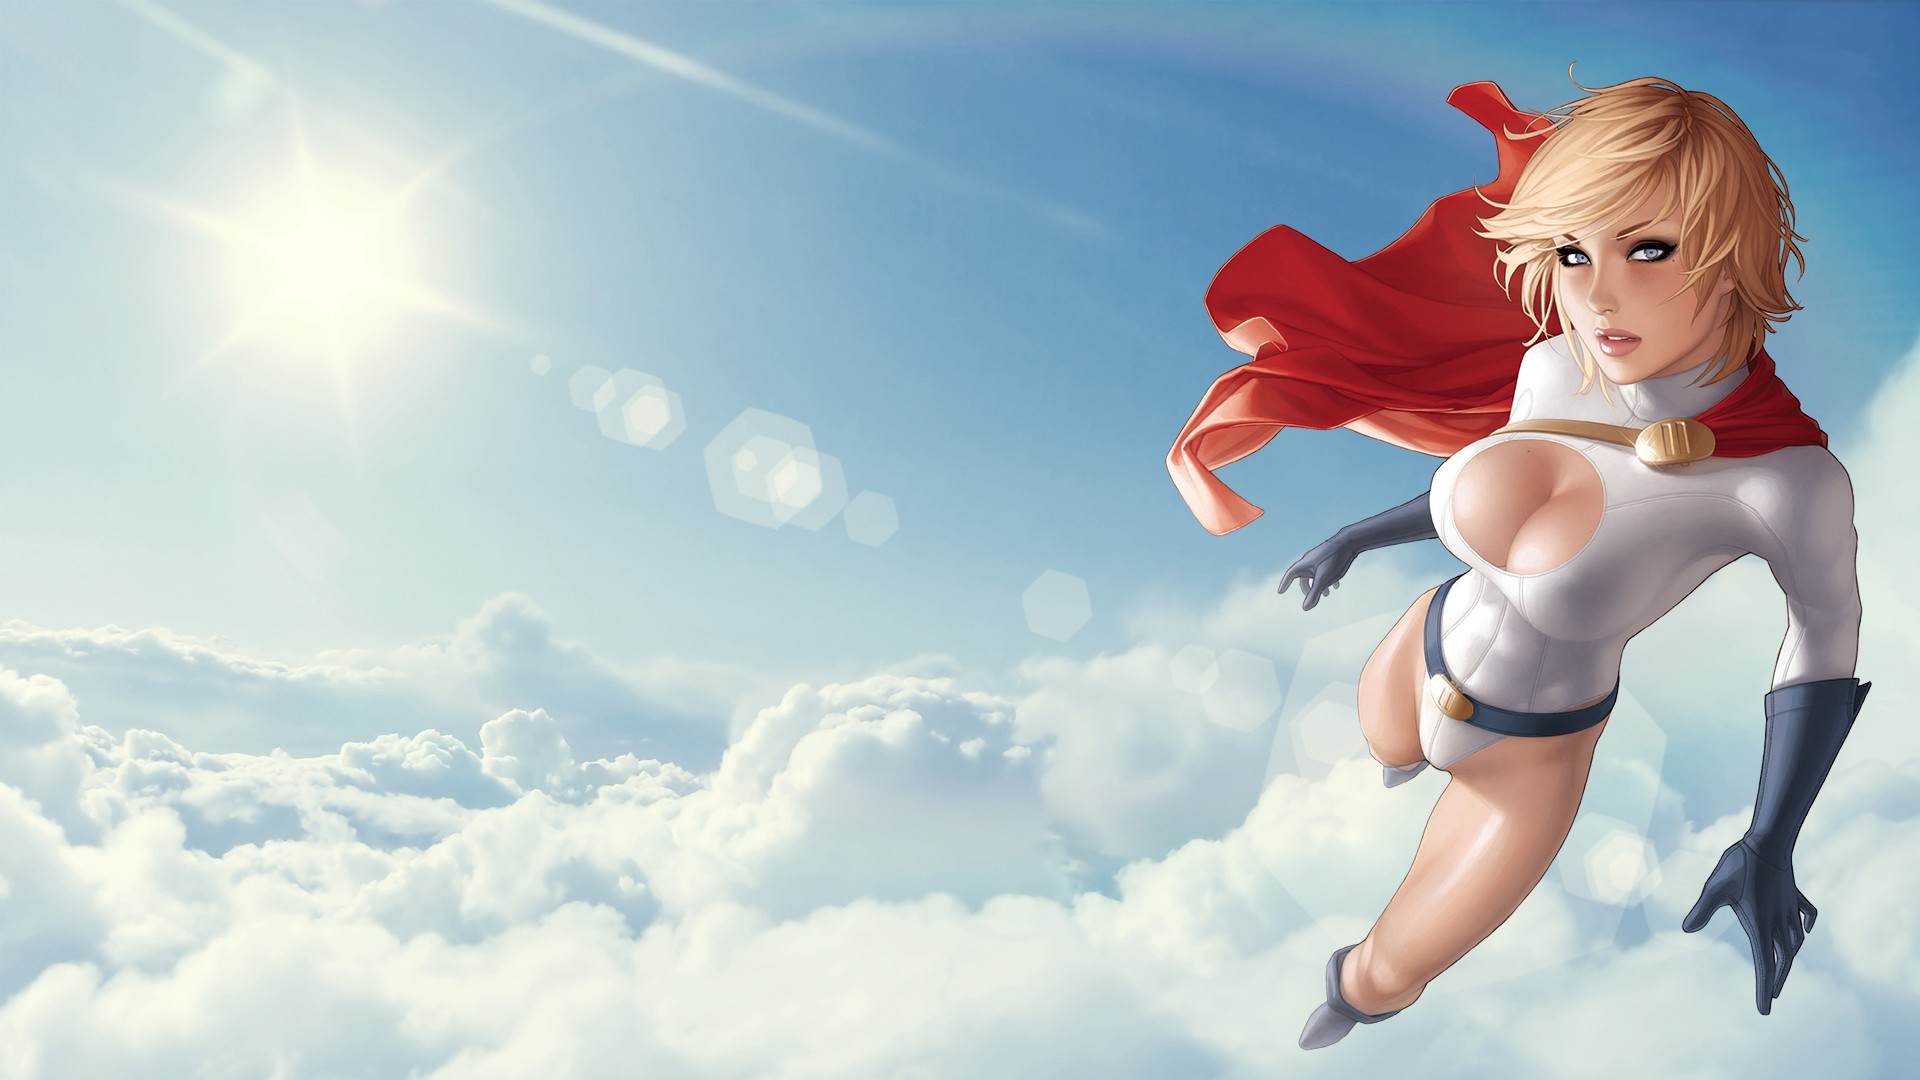 General 1920x1080 Power Girl flying women boobs big boobs sky Sun clouds superheroines cape looking at viewer